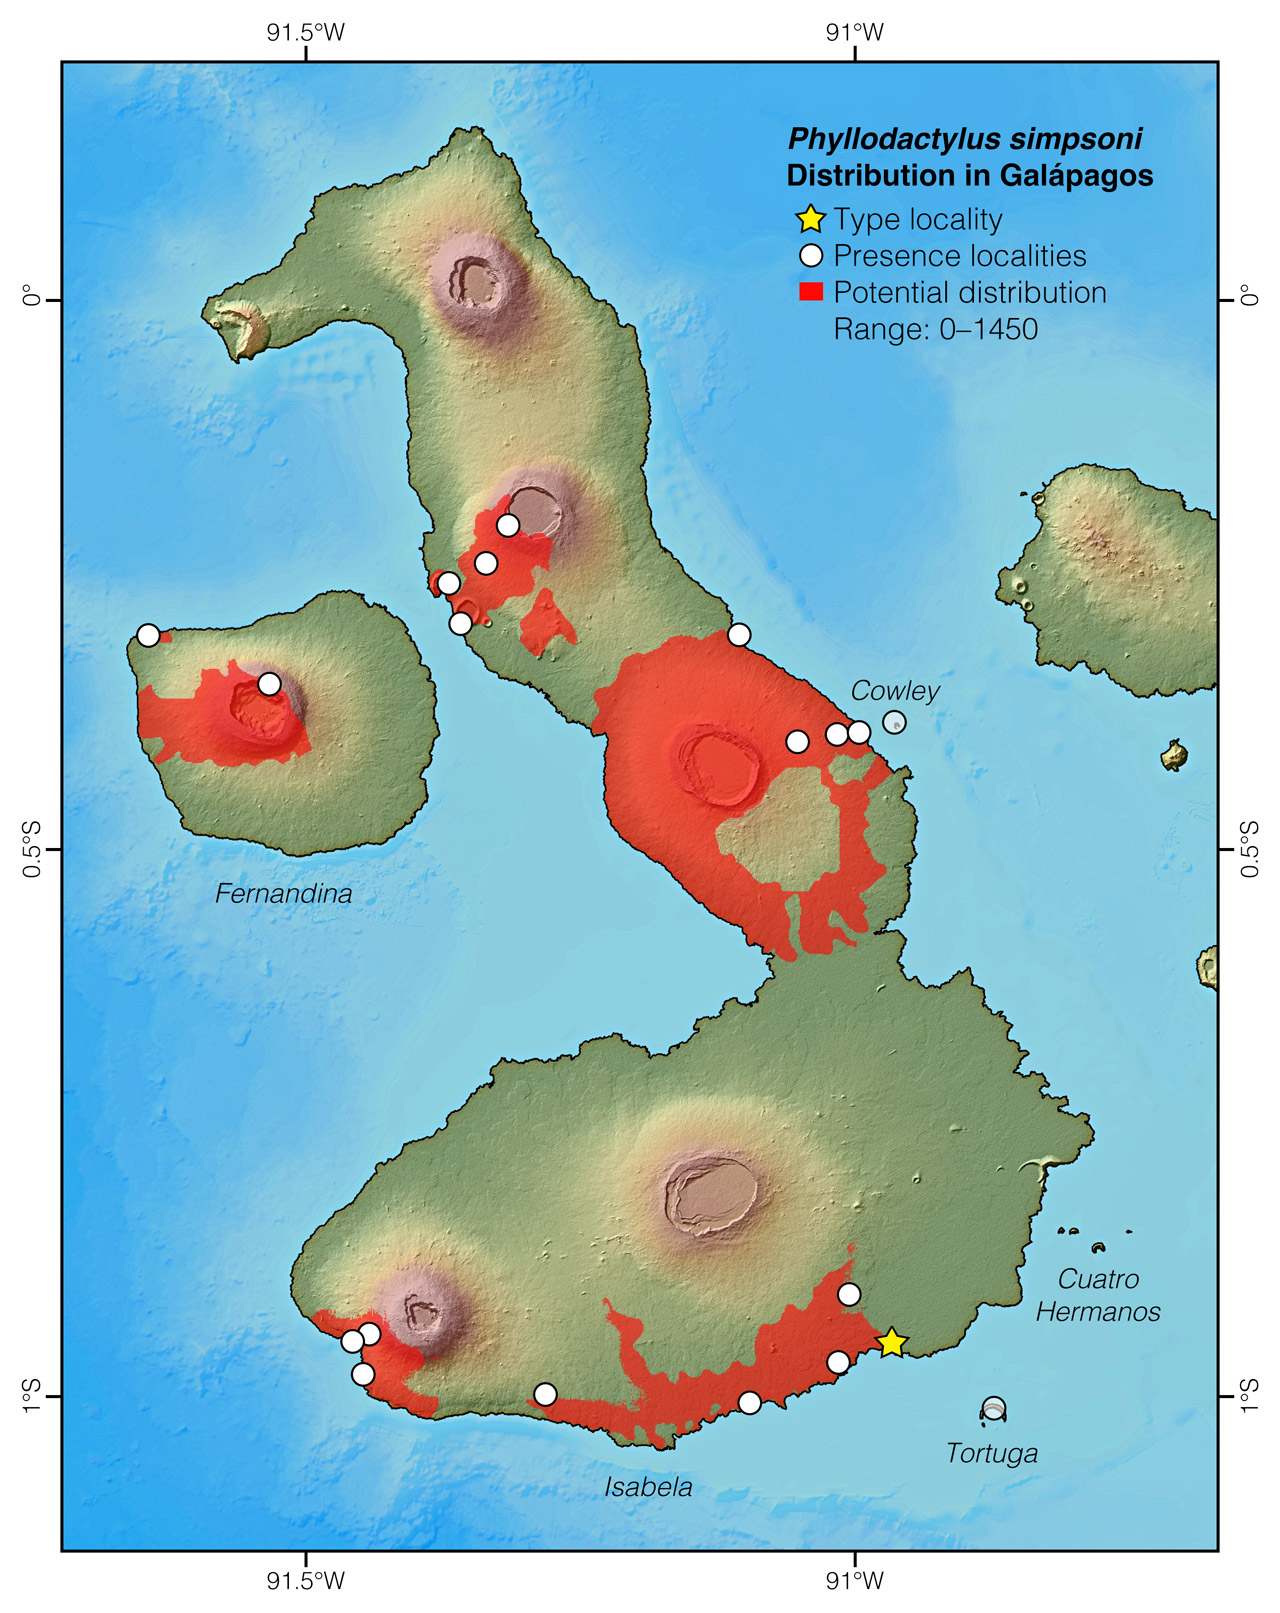 Distribution of Phyllodactylus simpsoni in Galápagos